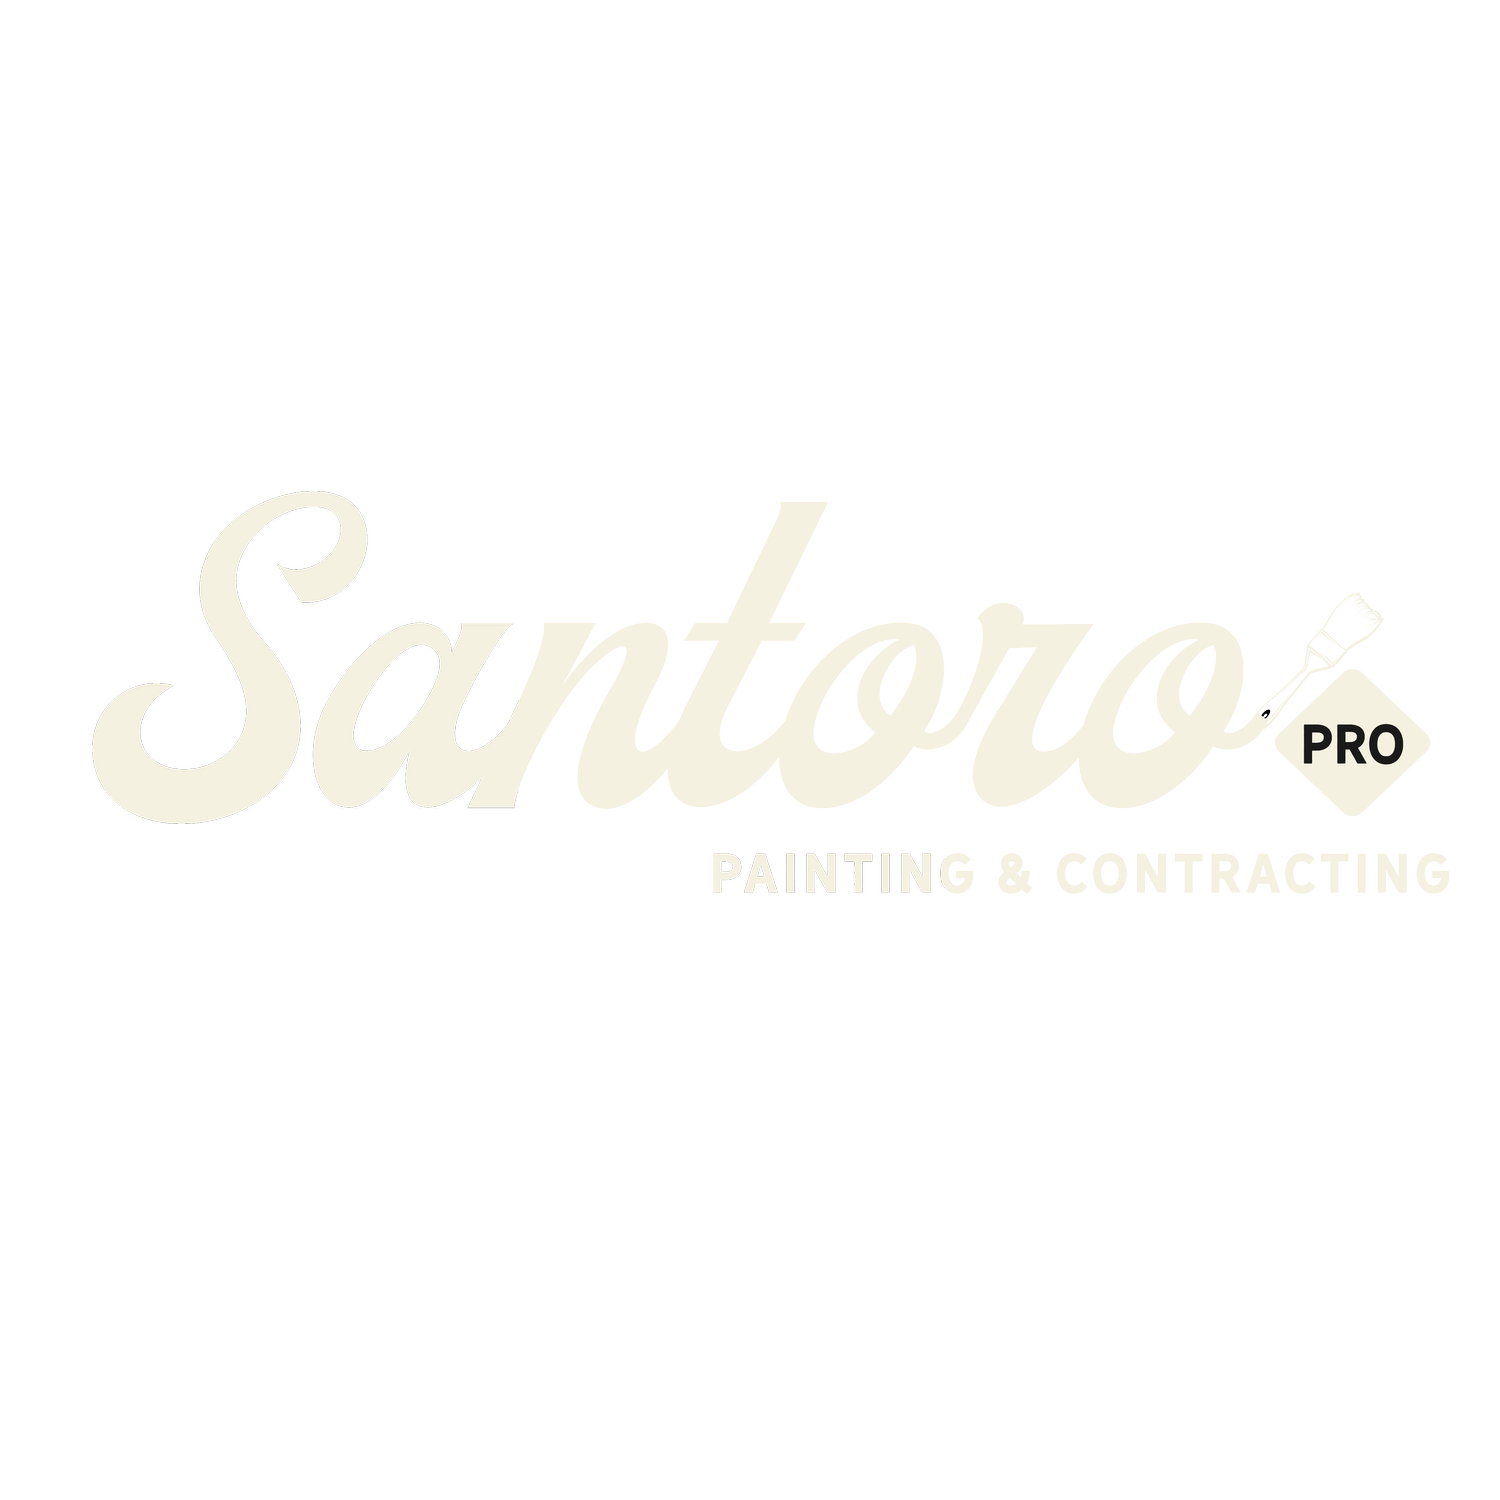 Santoro Pro Painting &amp; Contracting